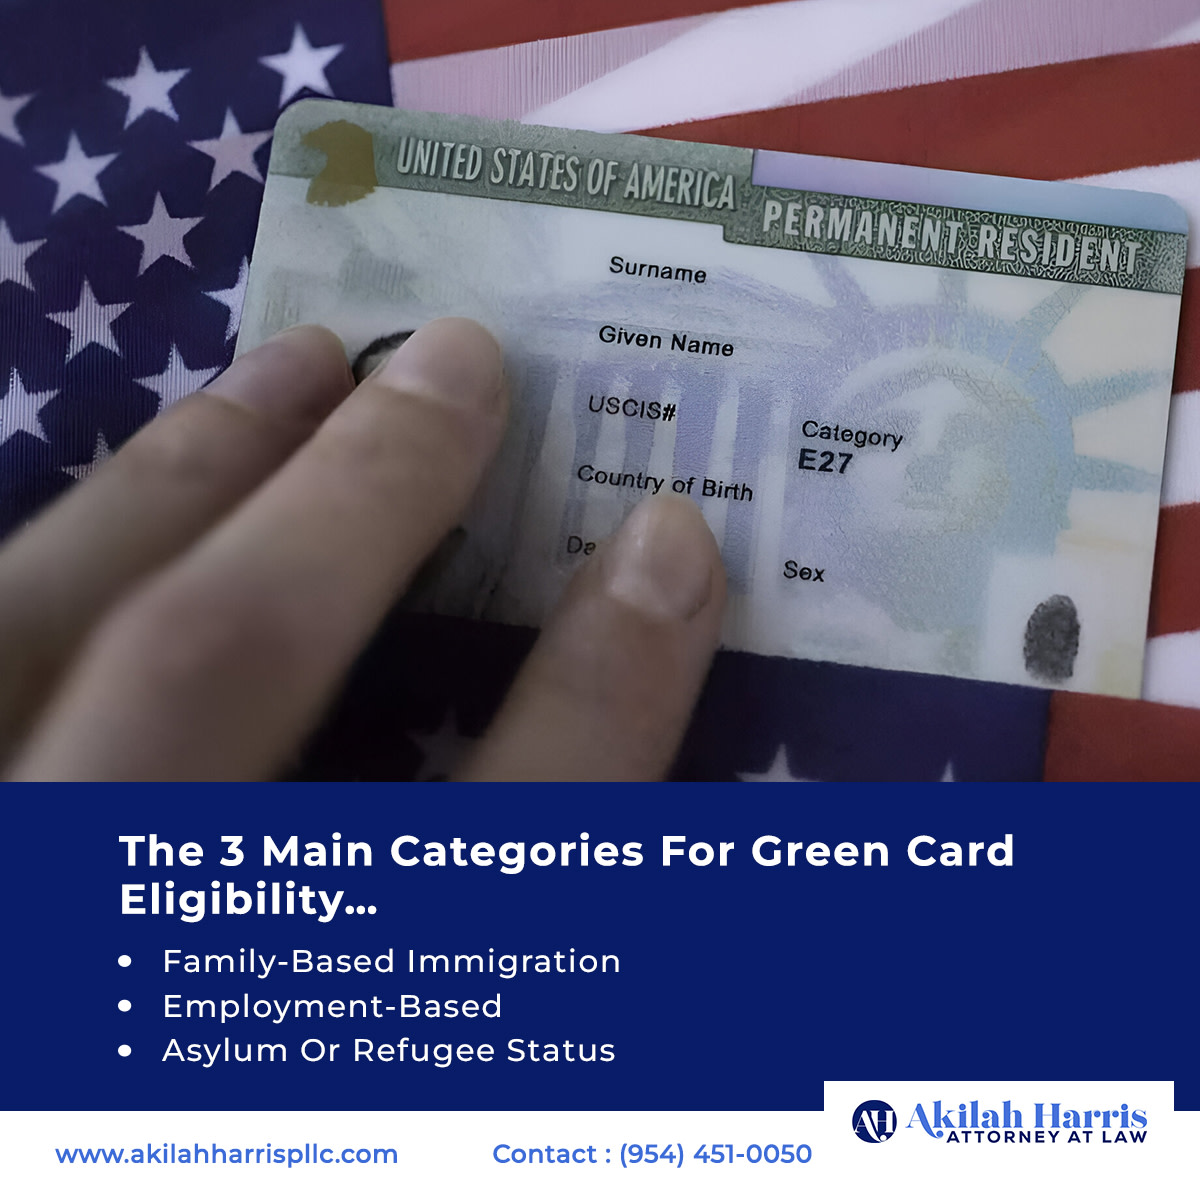 Akilah Harris - The 3 Main Categories For Green Card Eligibility…
LEARN MORE...akilahharrispllc.com/immigration-ti…

#immigration #immigrationlawyer #immigrationattorney #naturalization #naturalizationlawyer